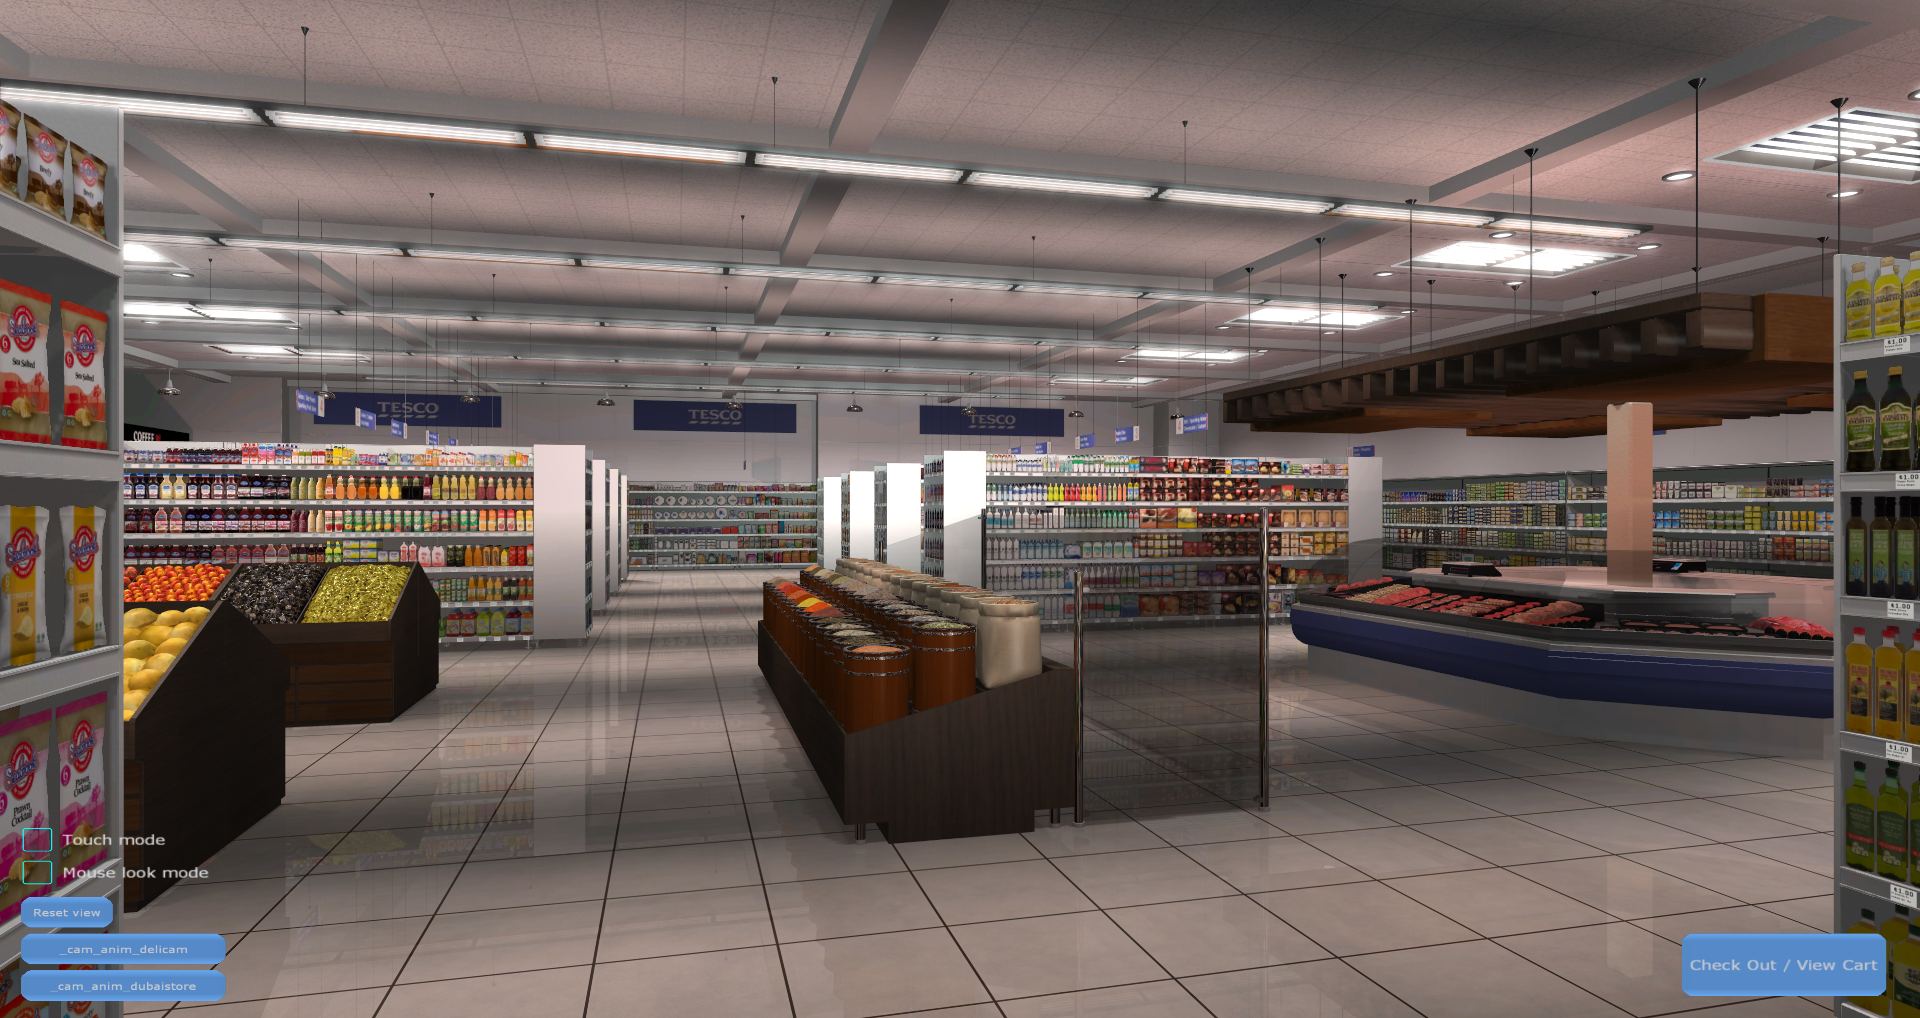 3D Virtual Shopping Virtual Store Screenshot from Carrefour VR Supermarket 4